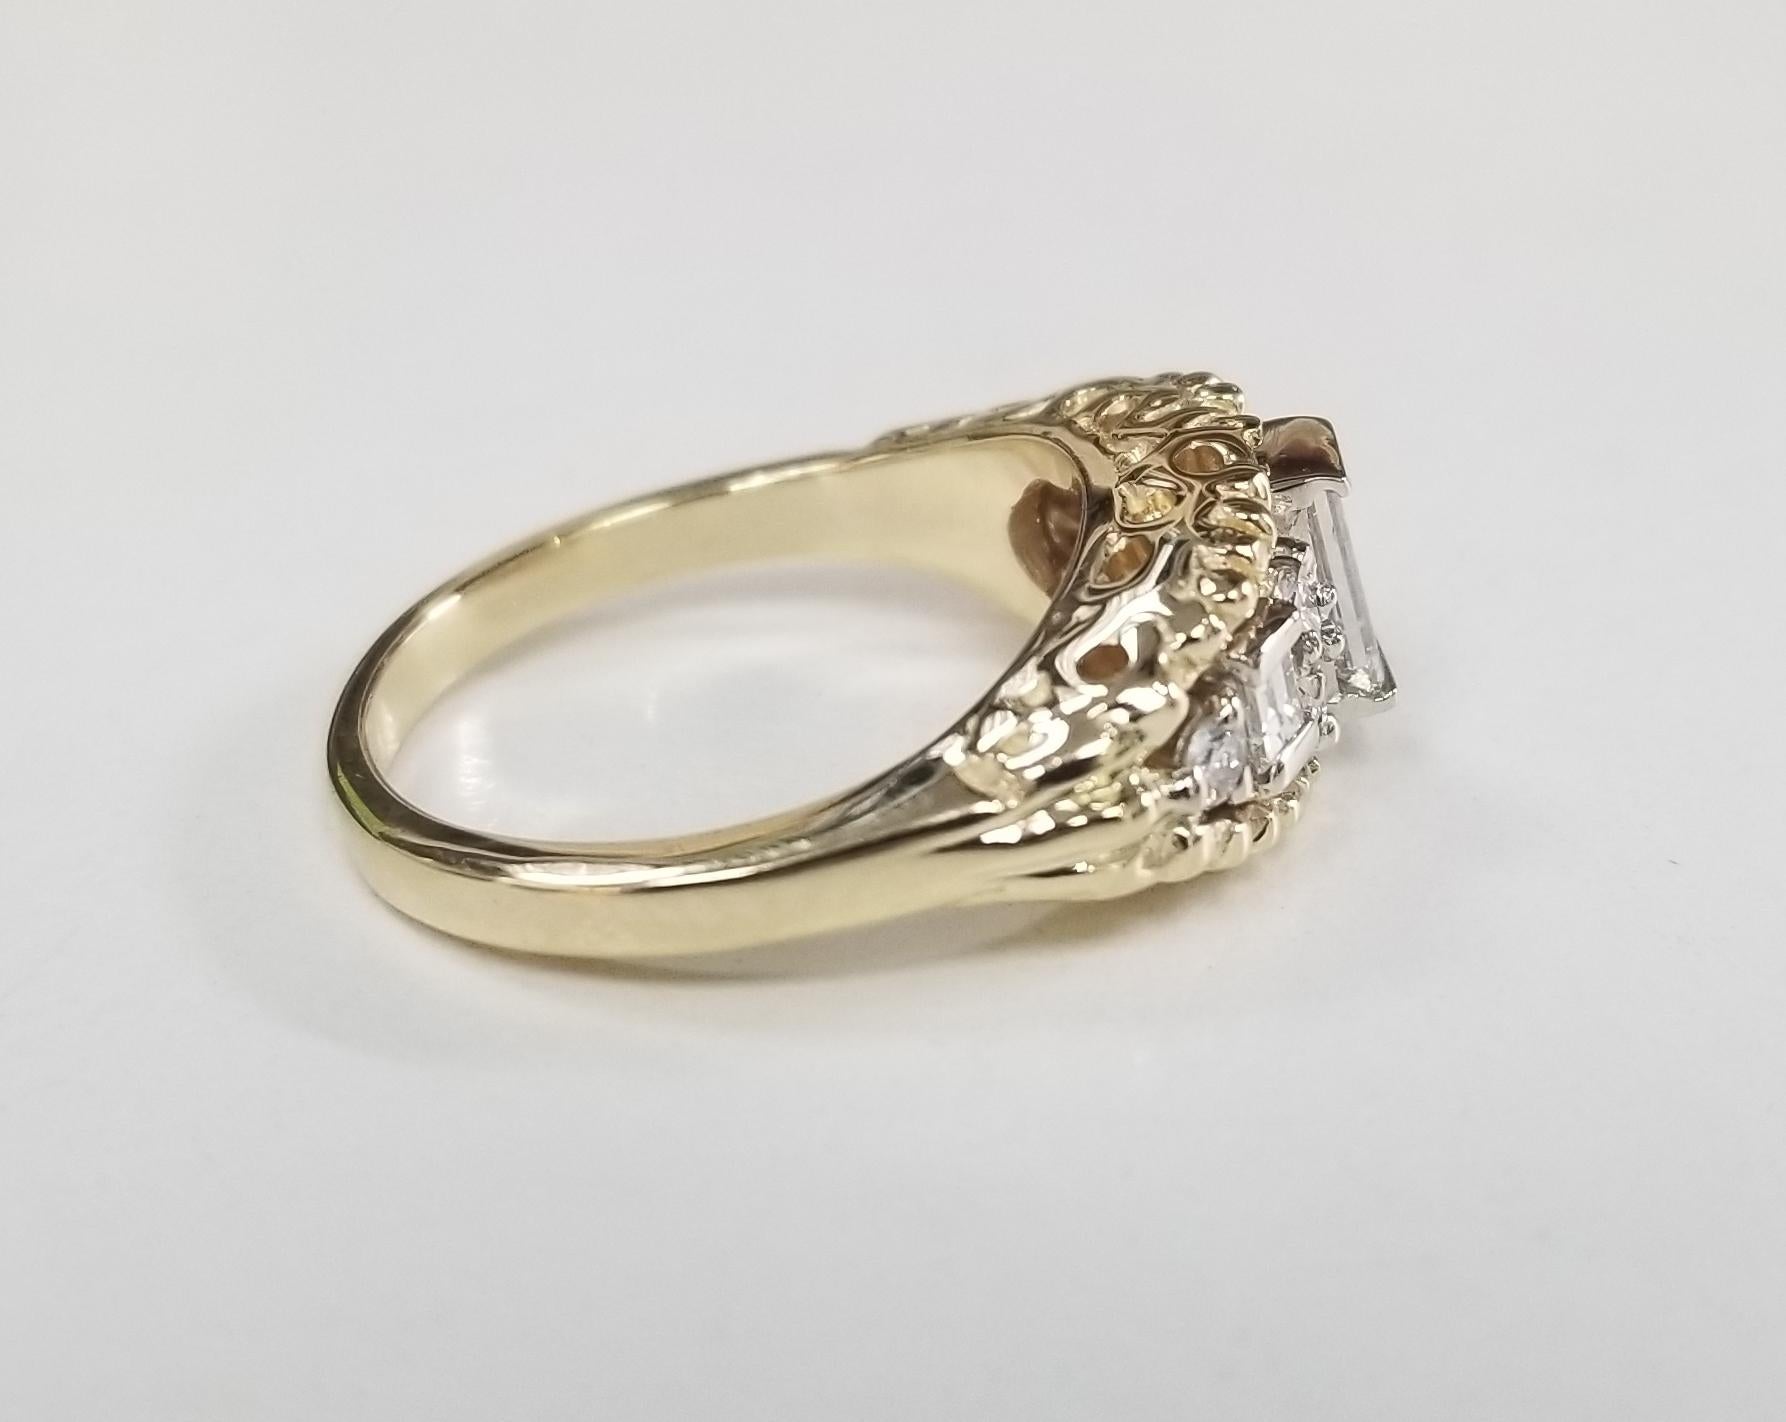 Contemporary 14k Yellow Gold Diamond Emerald Cut Diamond Ring with White Gold Insert